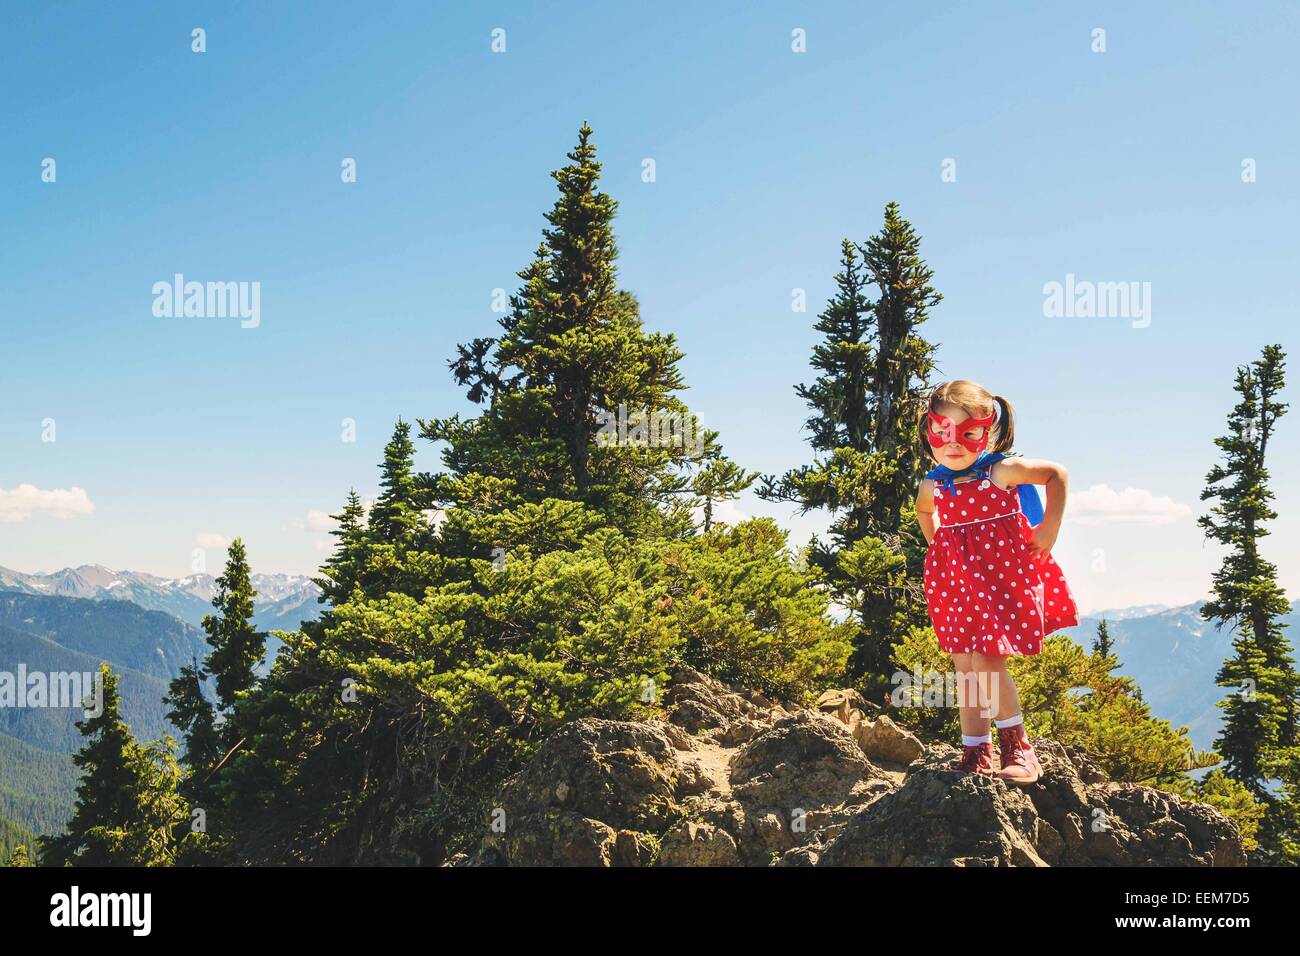 Girl dressed as a superhero standing on a mountain, USA Stock Photo